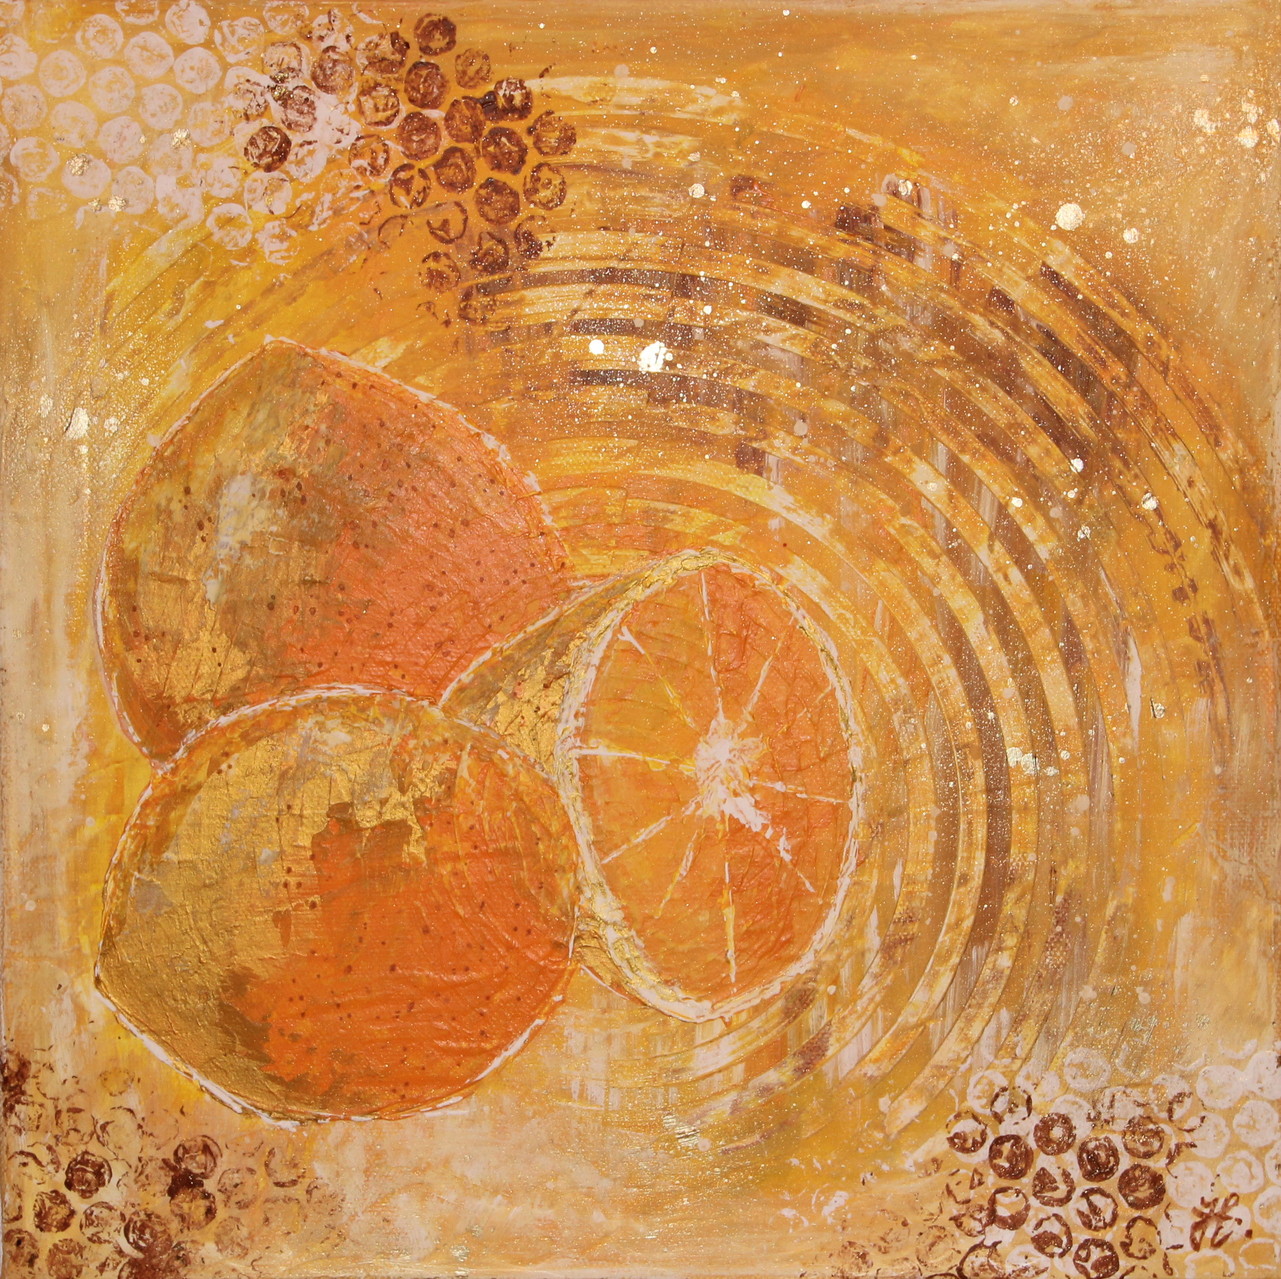 „goldige Apfelsinen“, 30 x 30 cm Acryl, Spachteltechnik mit Goldeffekt auf Leinwand, 2013